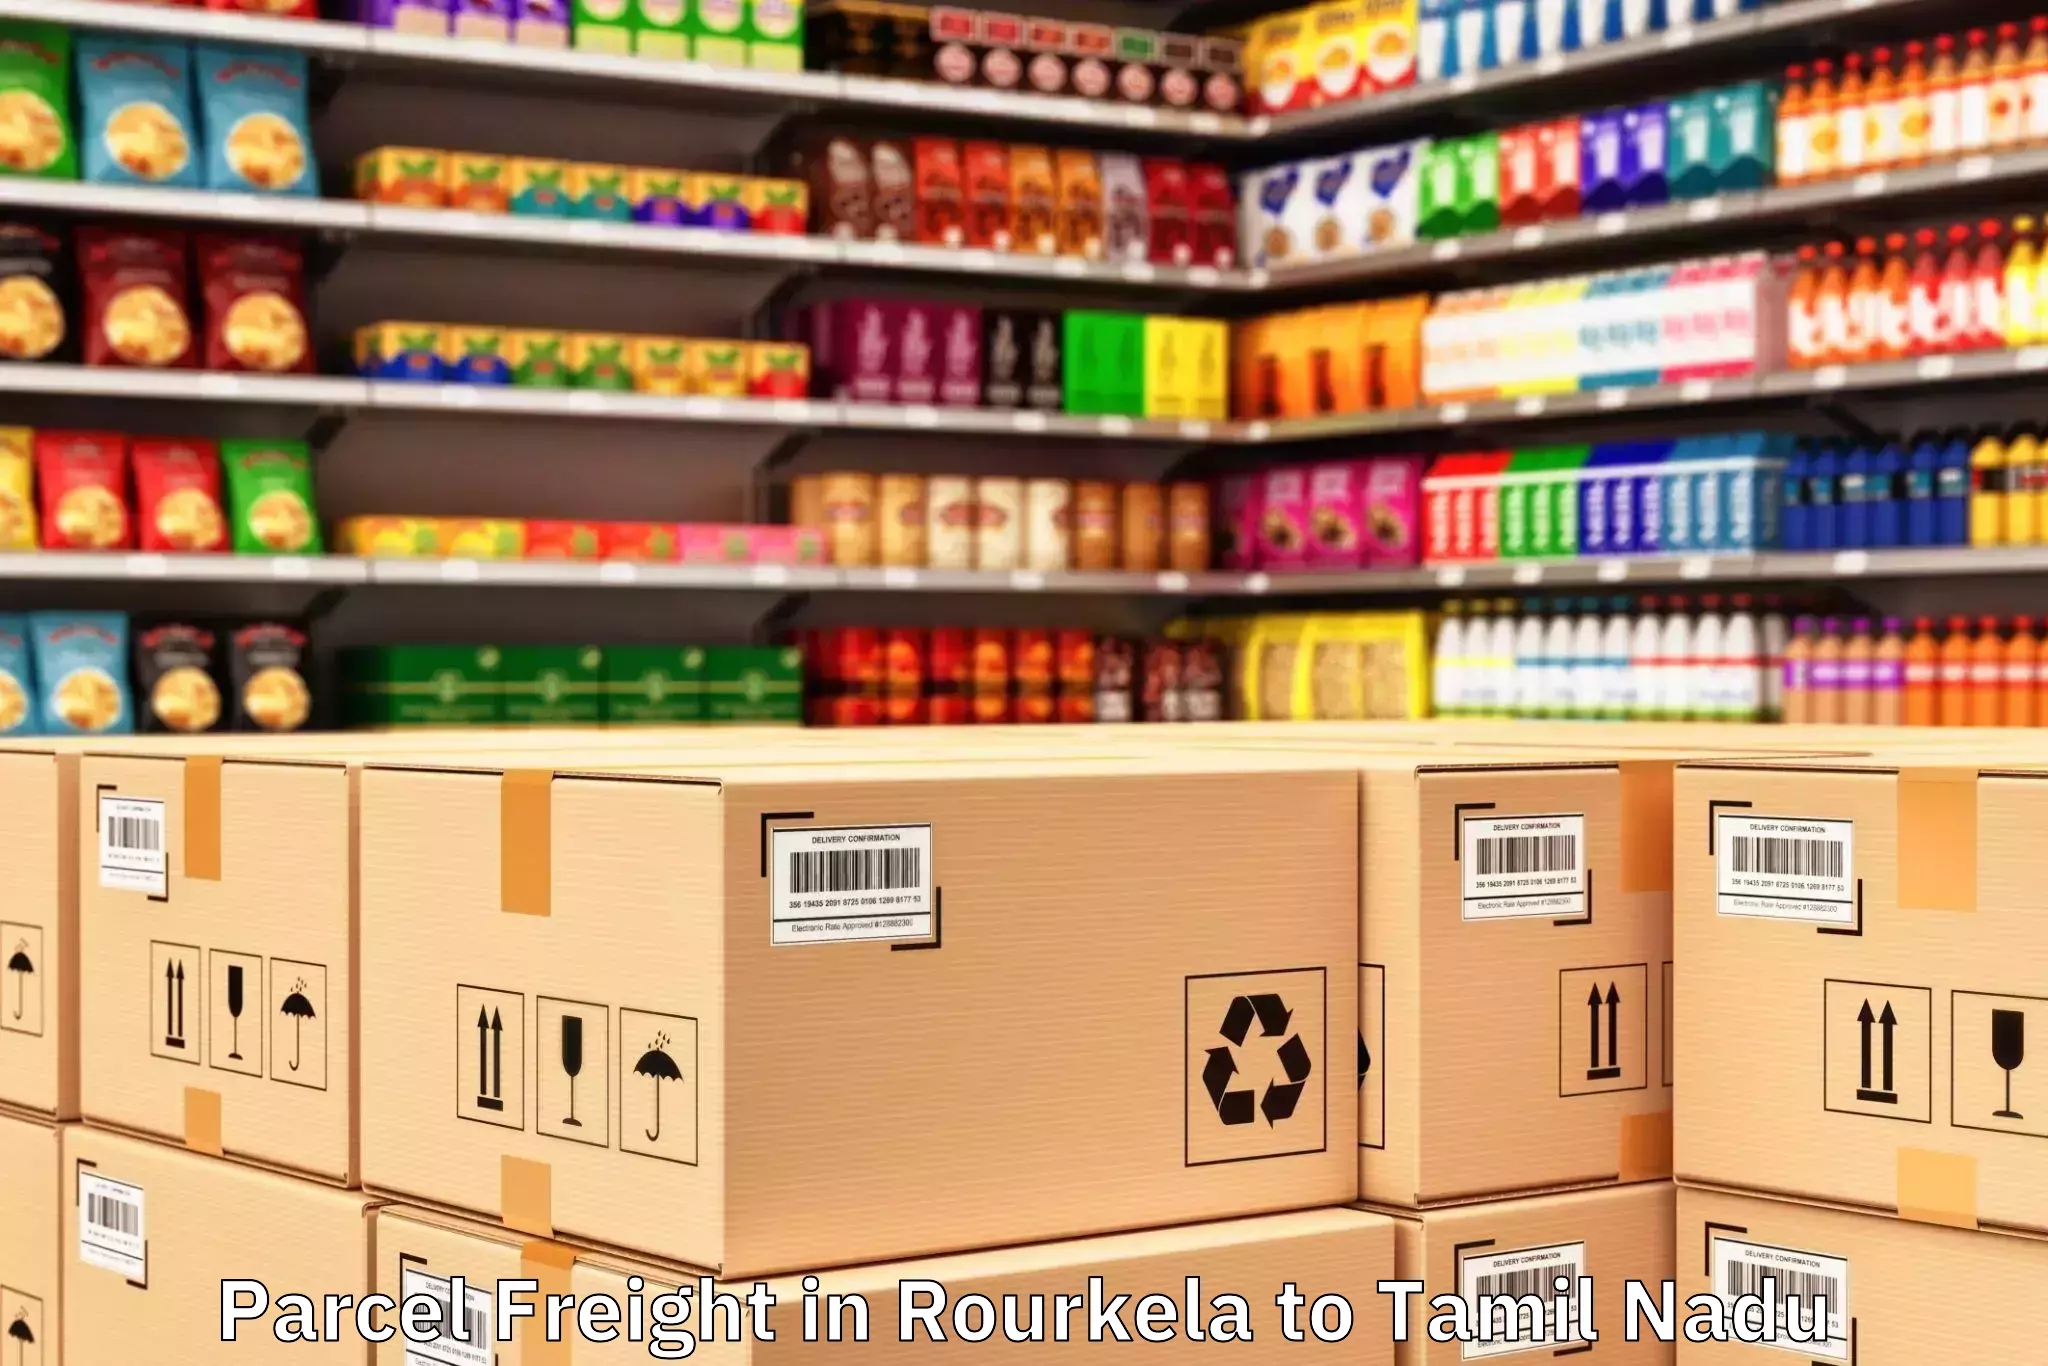 Trusted Rourkela to Sriperumbudur Parcel Freight